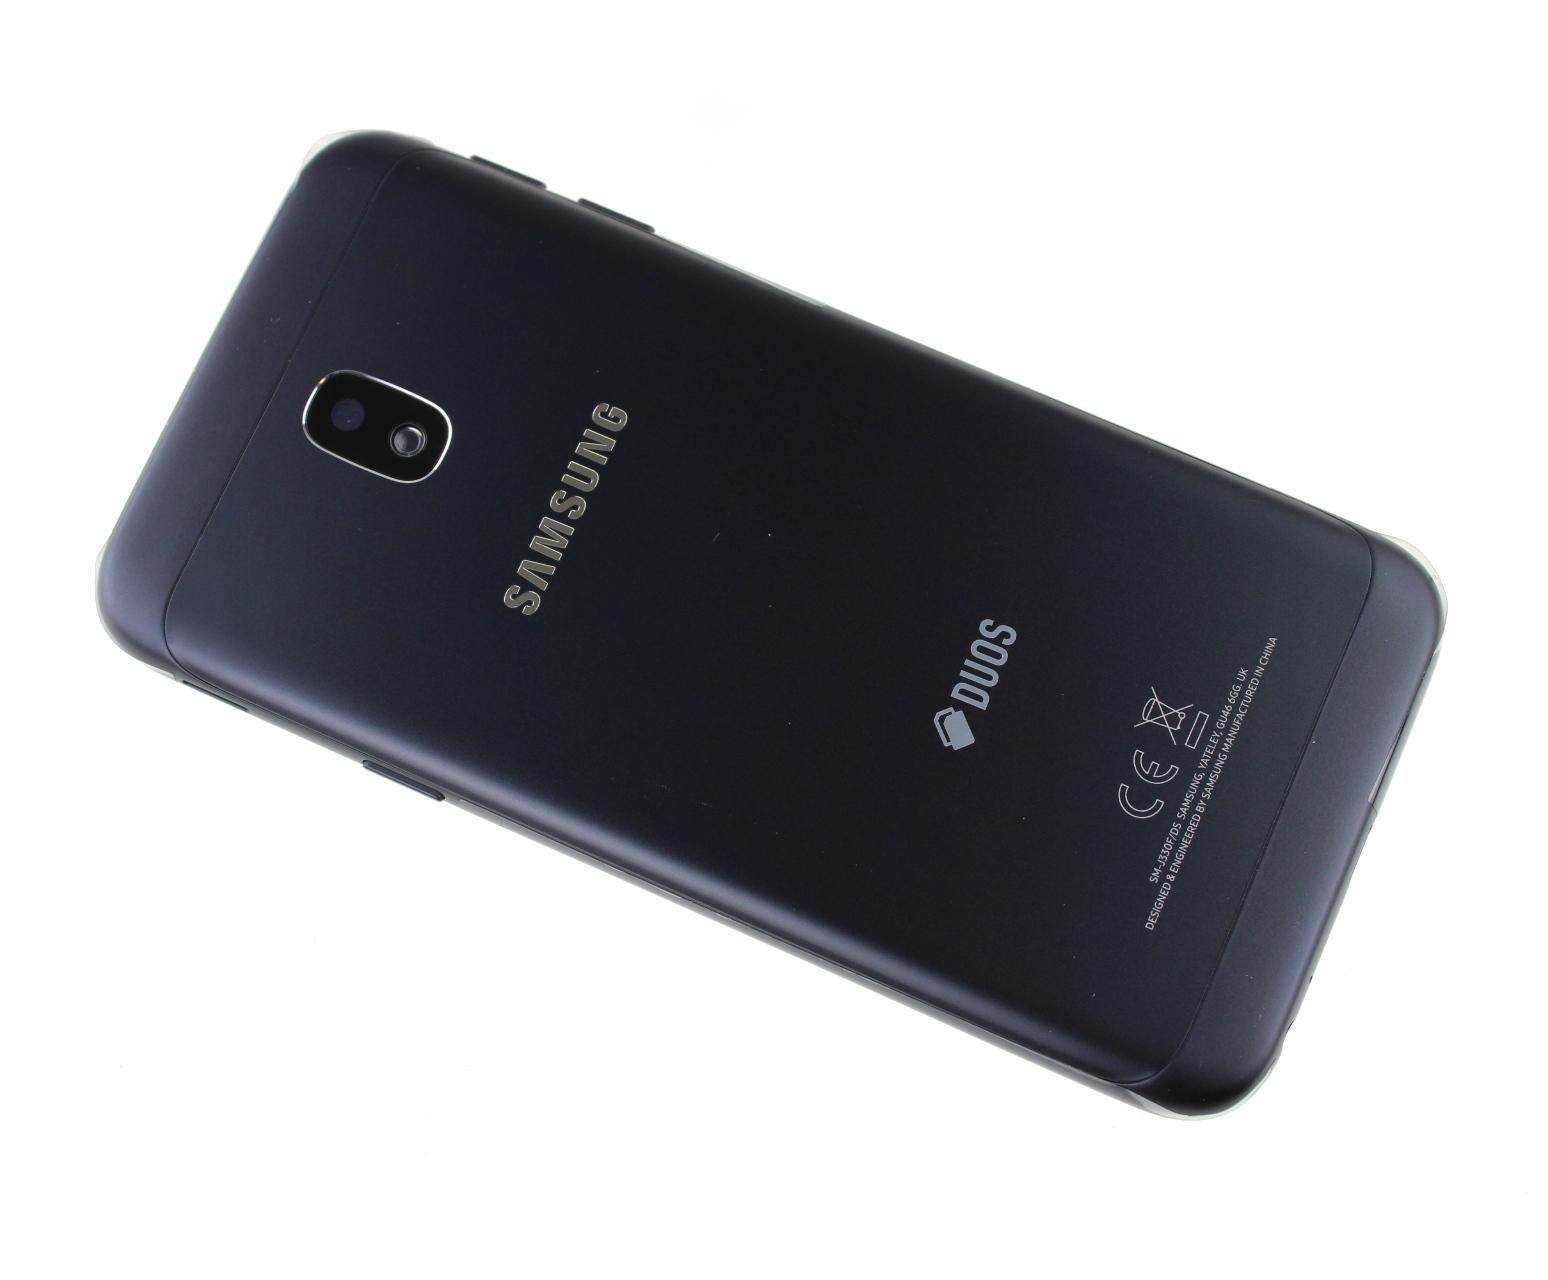 Originál kryt baterie Samsung Galaxy J3 2017 SM-J330 černý s korpusem